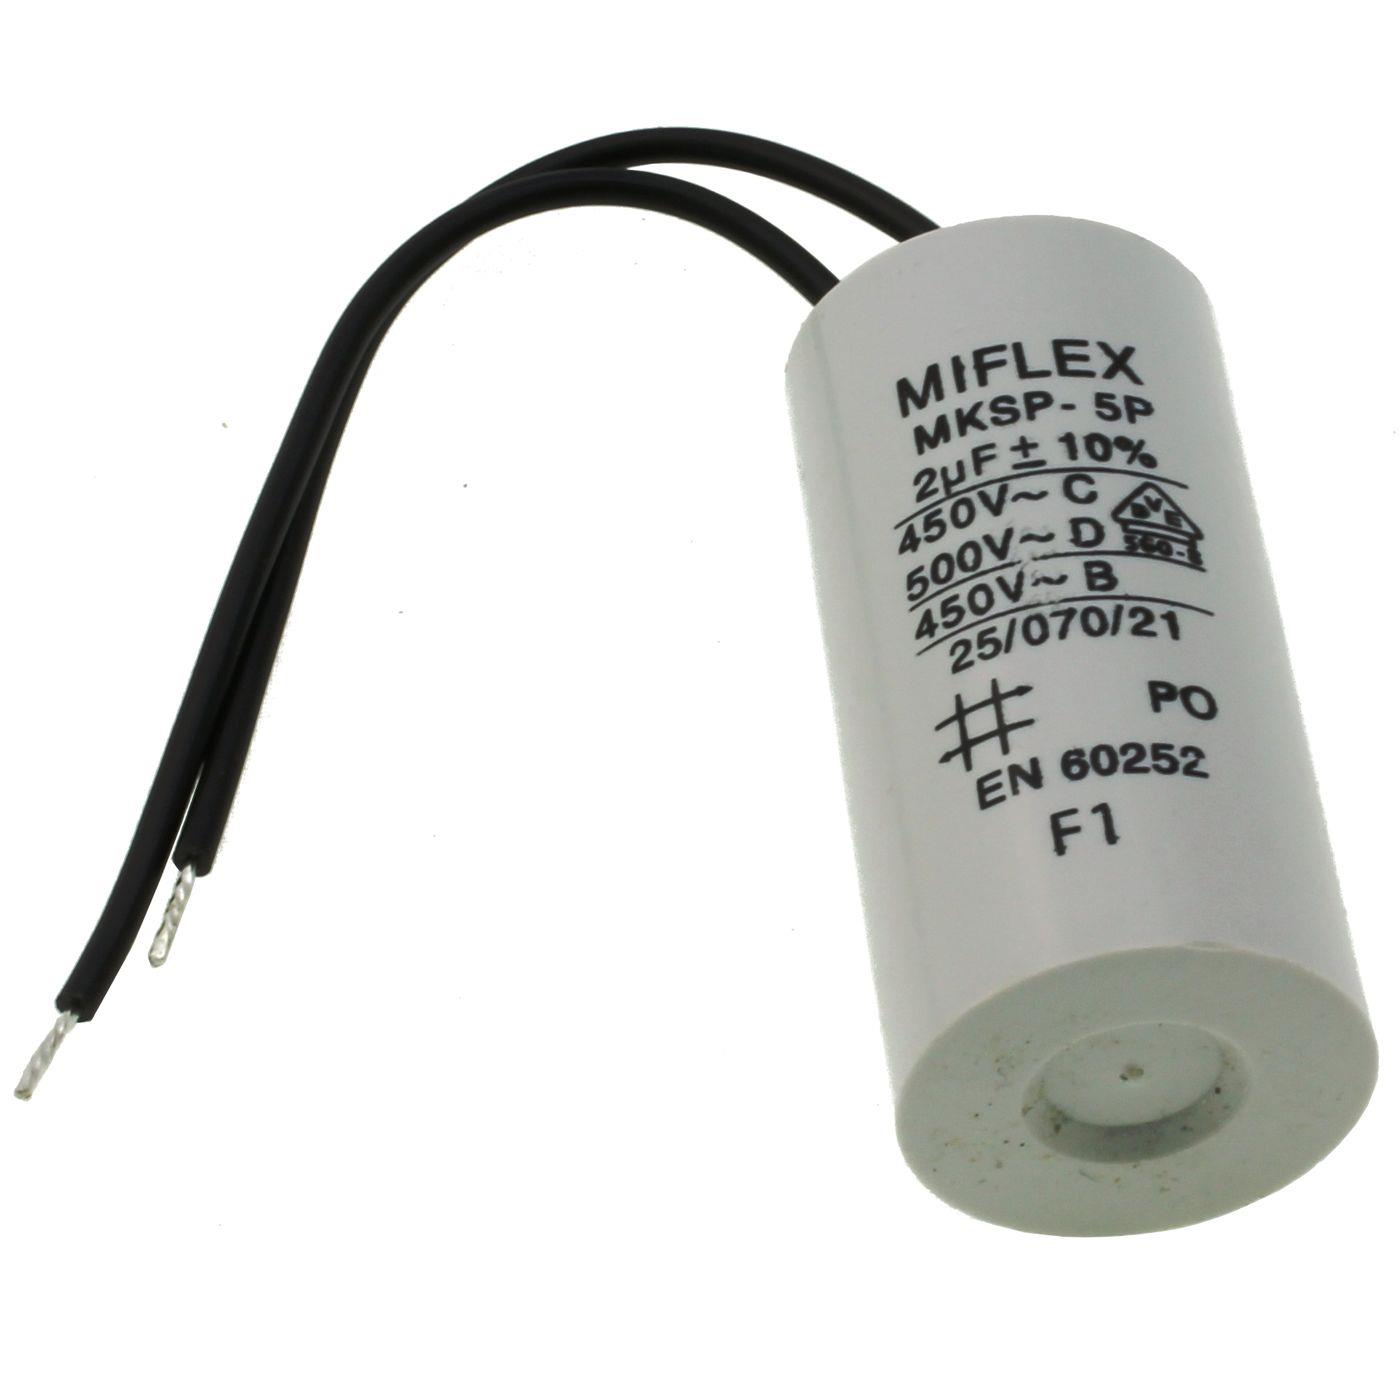 Anlaufkondensator Motorkondensator 2µF 450V 25x51mm Kabel 10cm Miflex 2uF